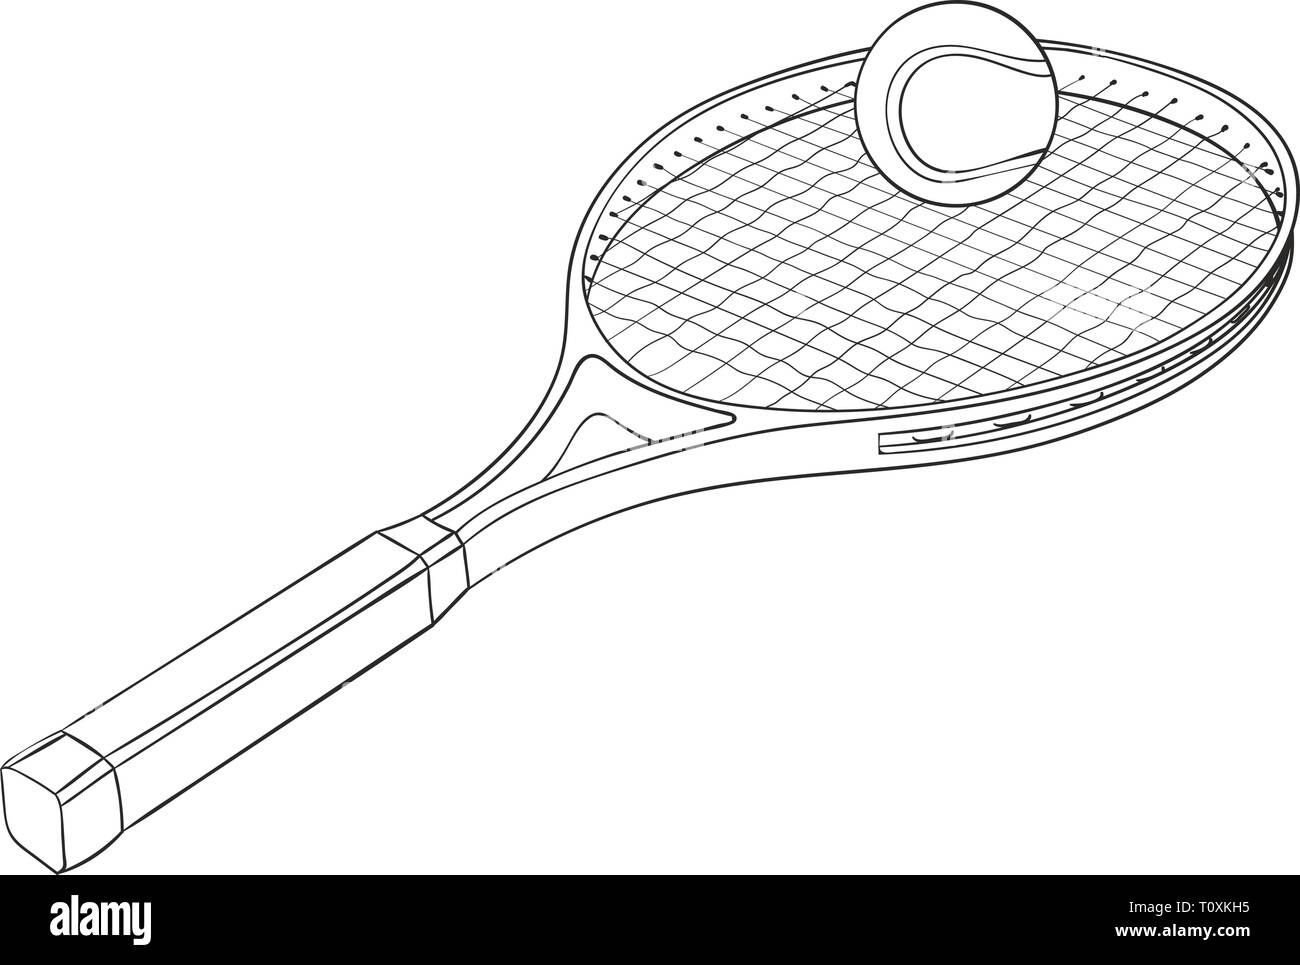 Zaailing collegegeld Astrolabium Tennis racket with a ball. Hand drawn sketch Stock Vector Image & Art -  Alamy